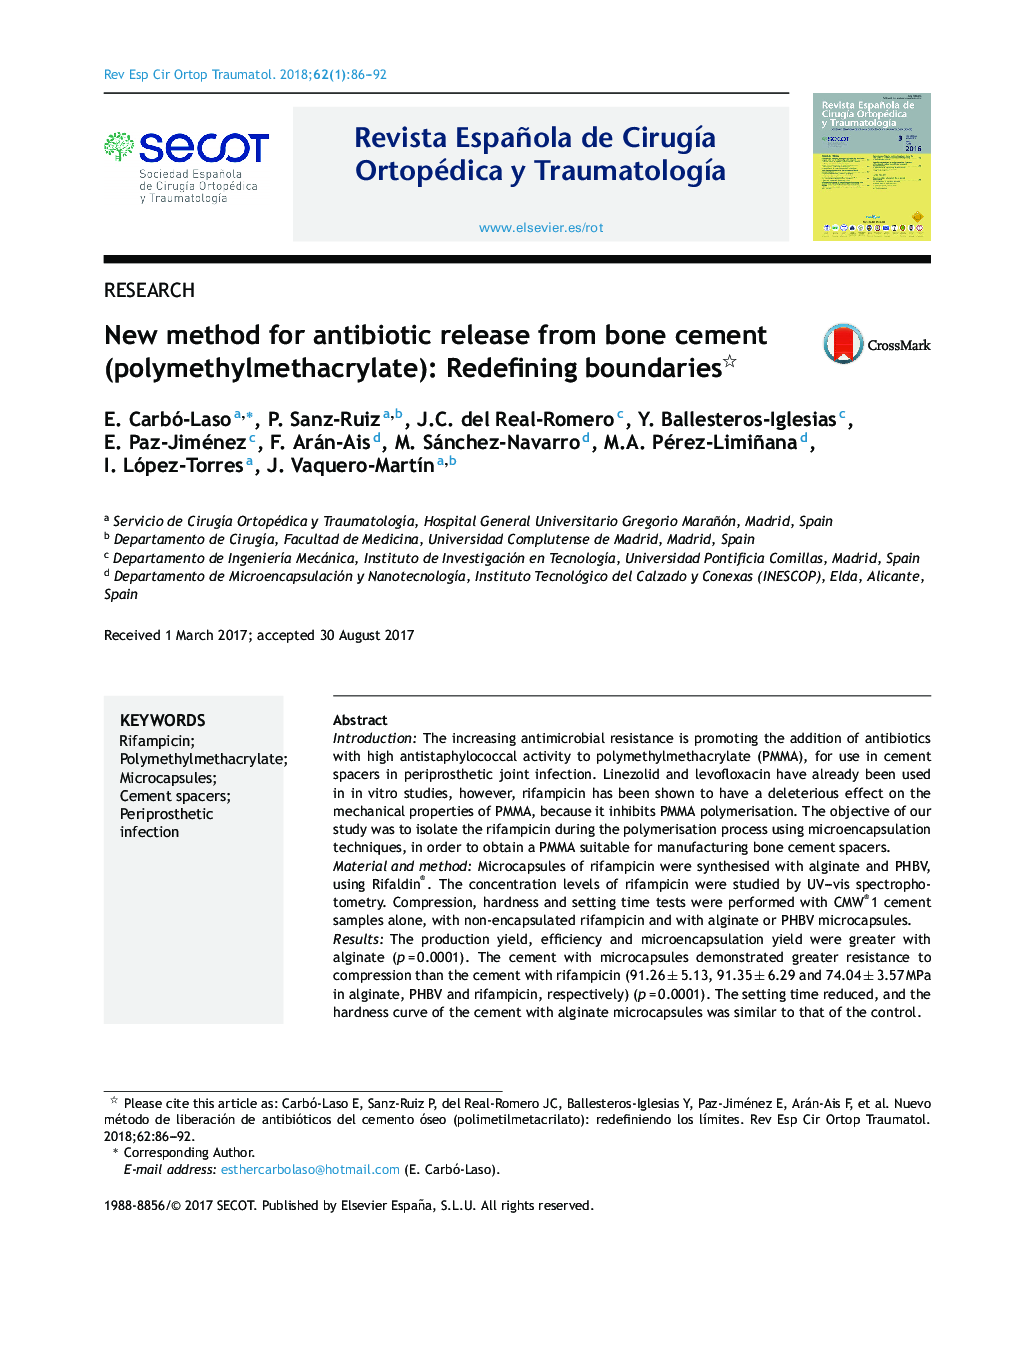 New method for antibiotic release from bone cement (polymethylmethacrylate): Redefining boundaries